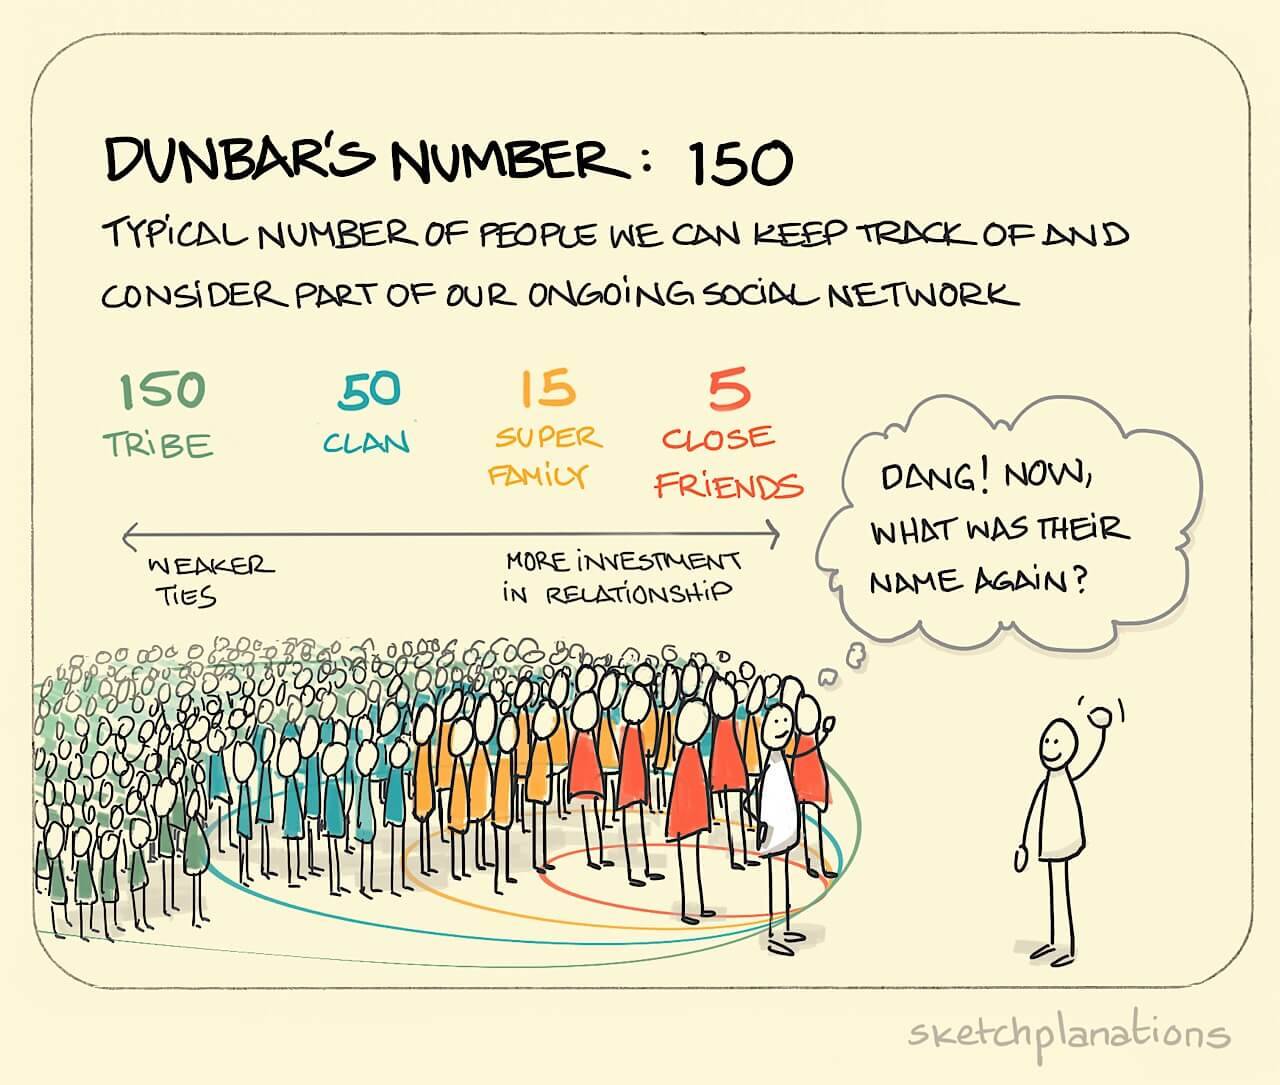 Dunbar's number: 150